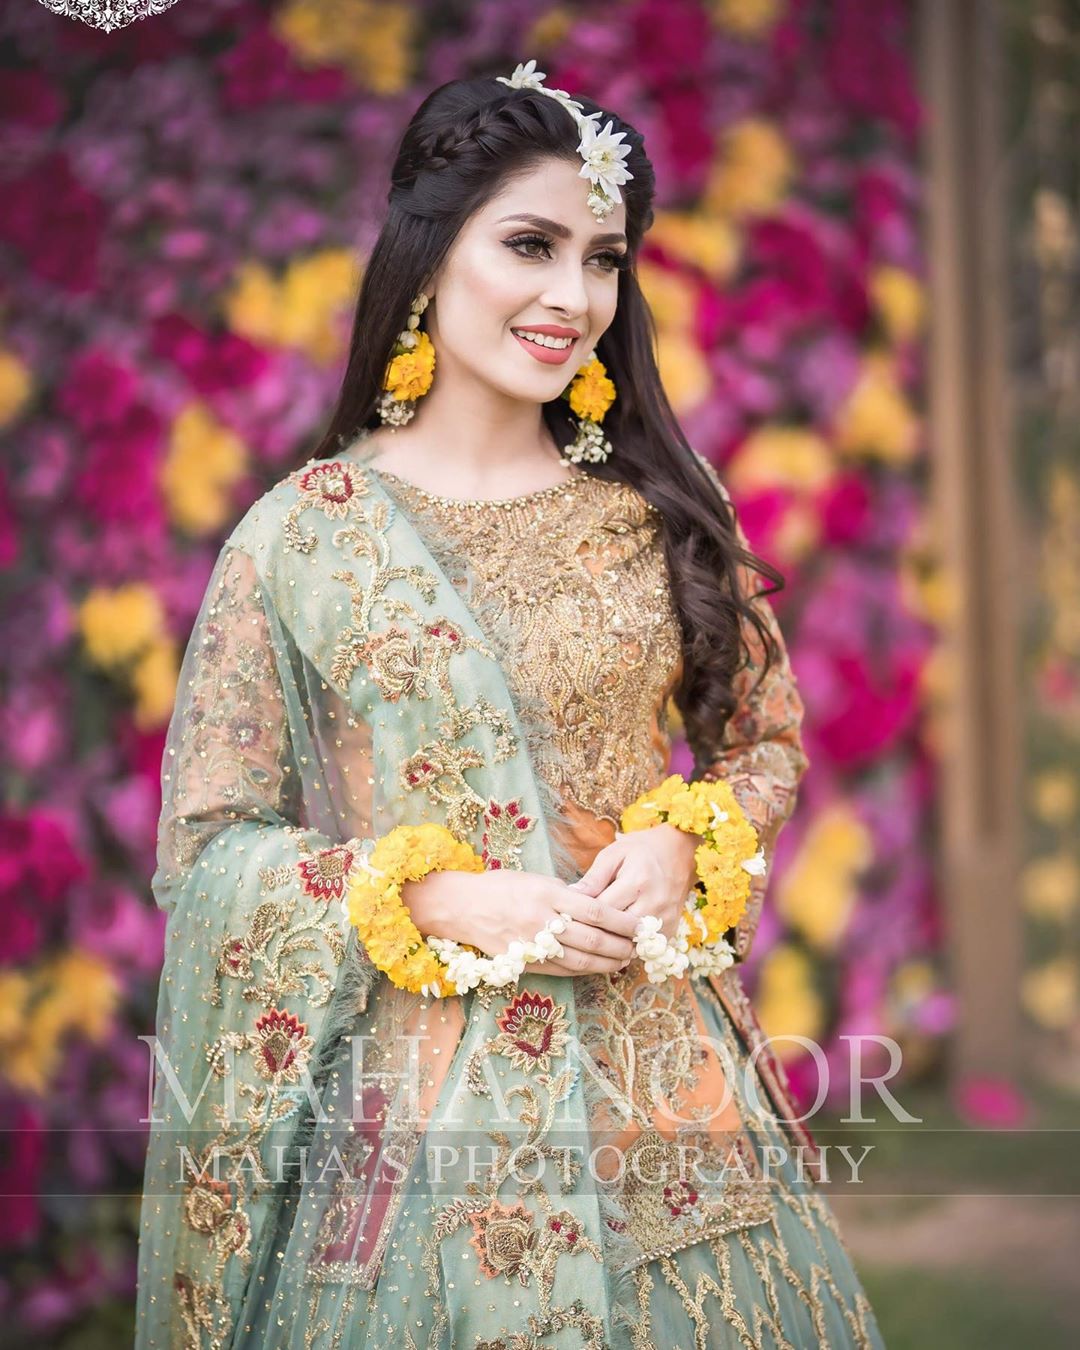 Beauty Queen Ayeza Khan Stunning Looks in New Bridal Photo Shoot